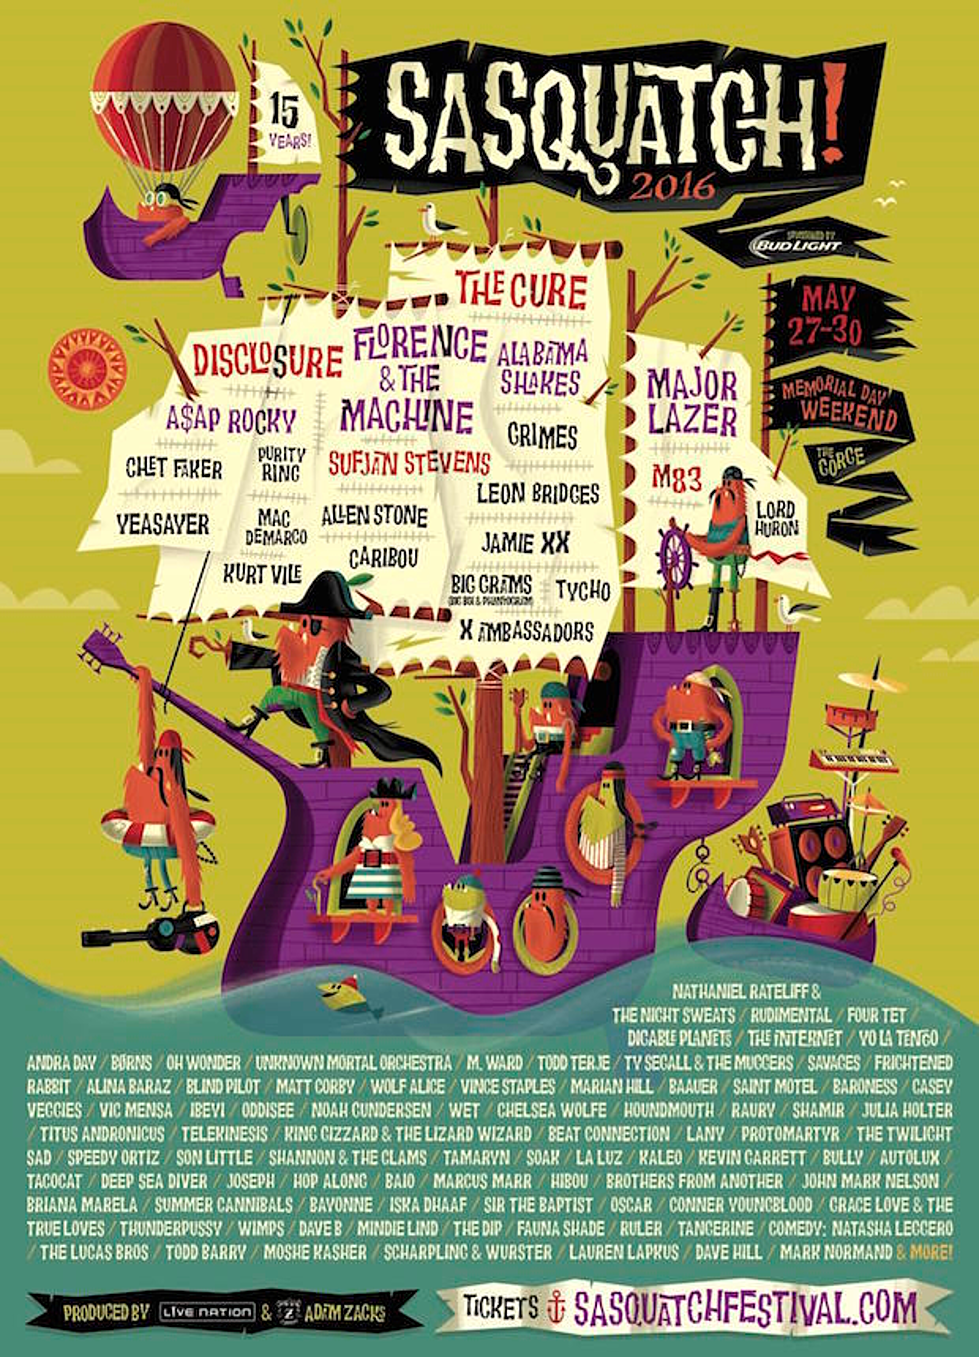 2016 Sasquatch Music Festival Lineup Includes ASAP Rocky, Vince Staples, Vic Mensa & More